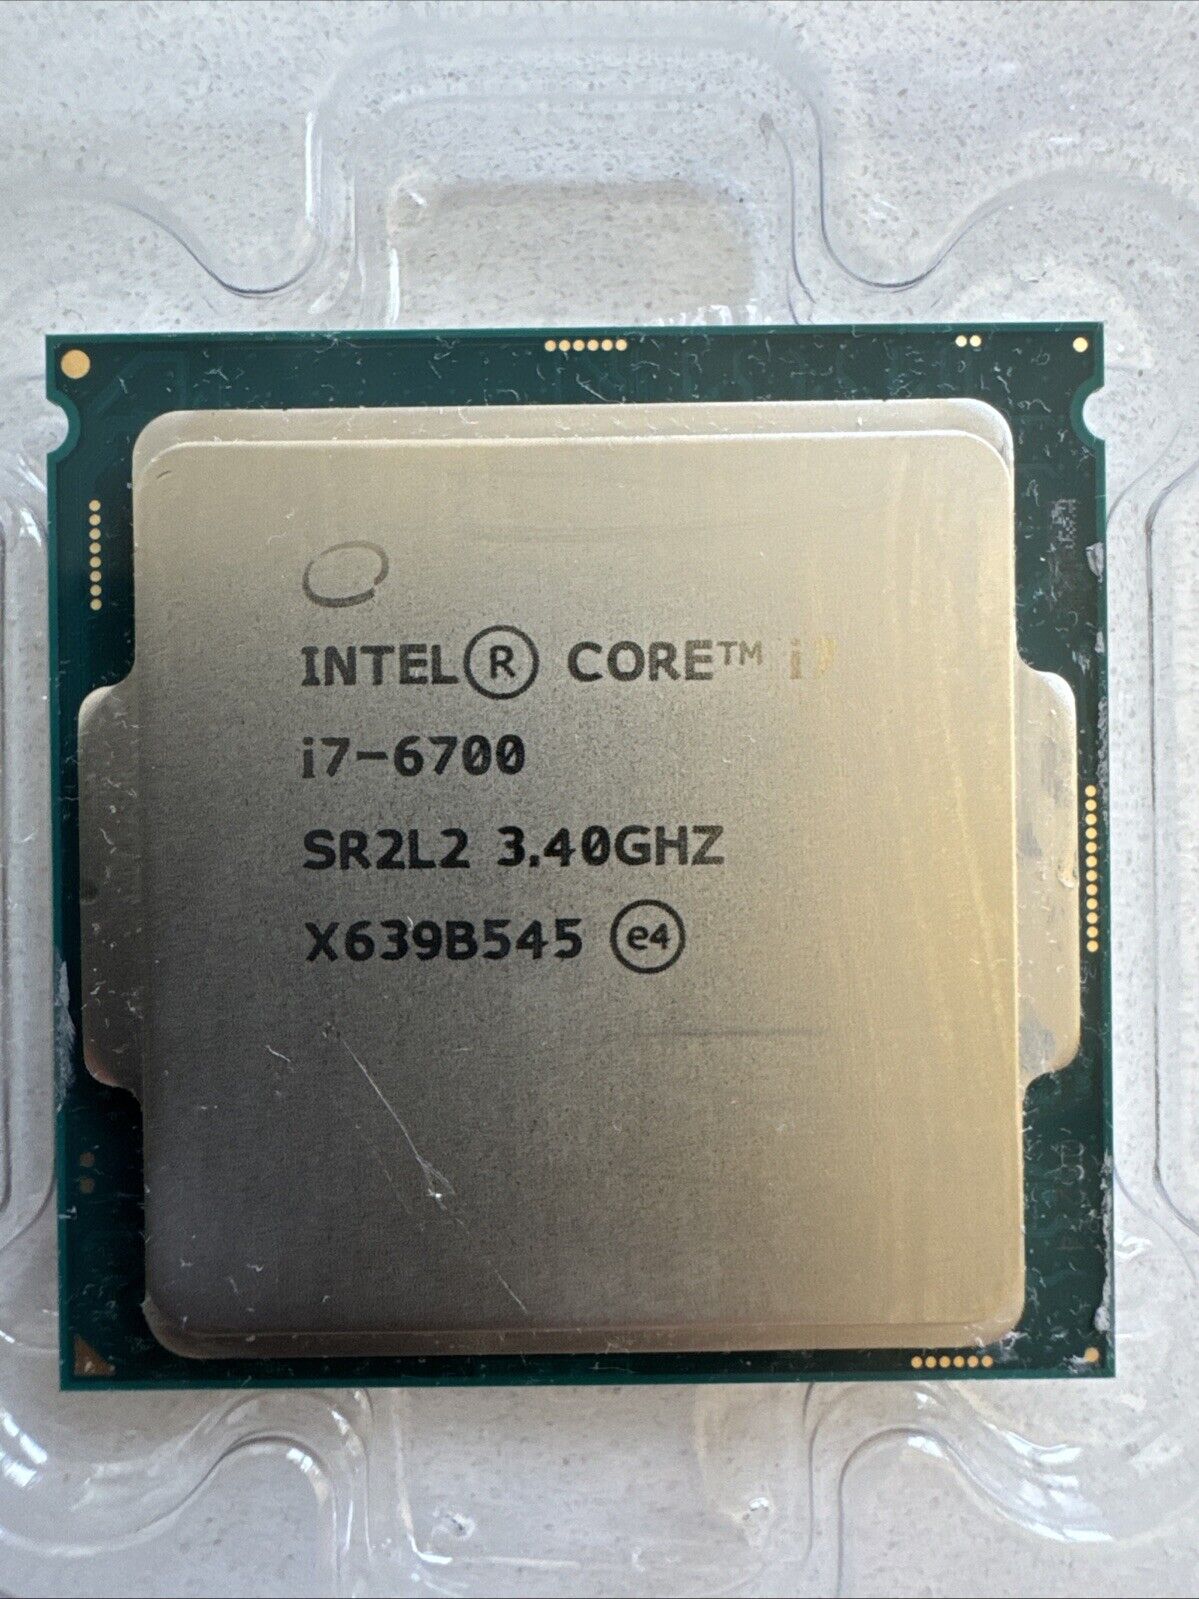 Intel Core i7-6700K 4.0GHz Quad-Core CPU Processor Tested